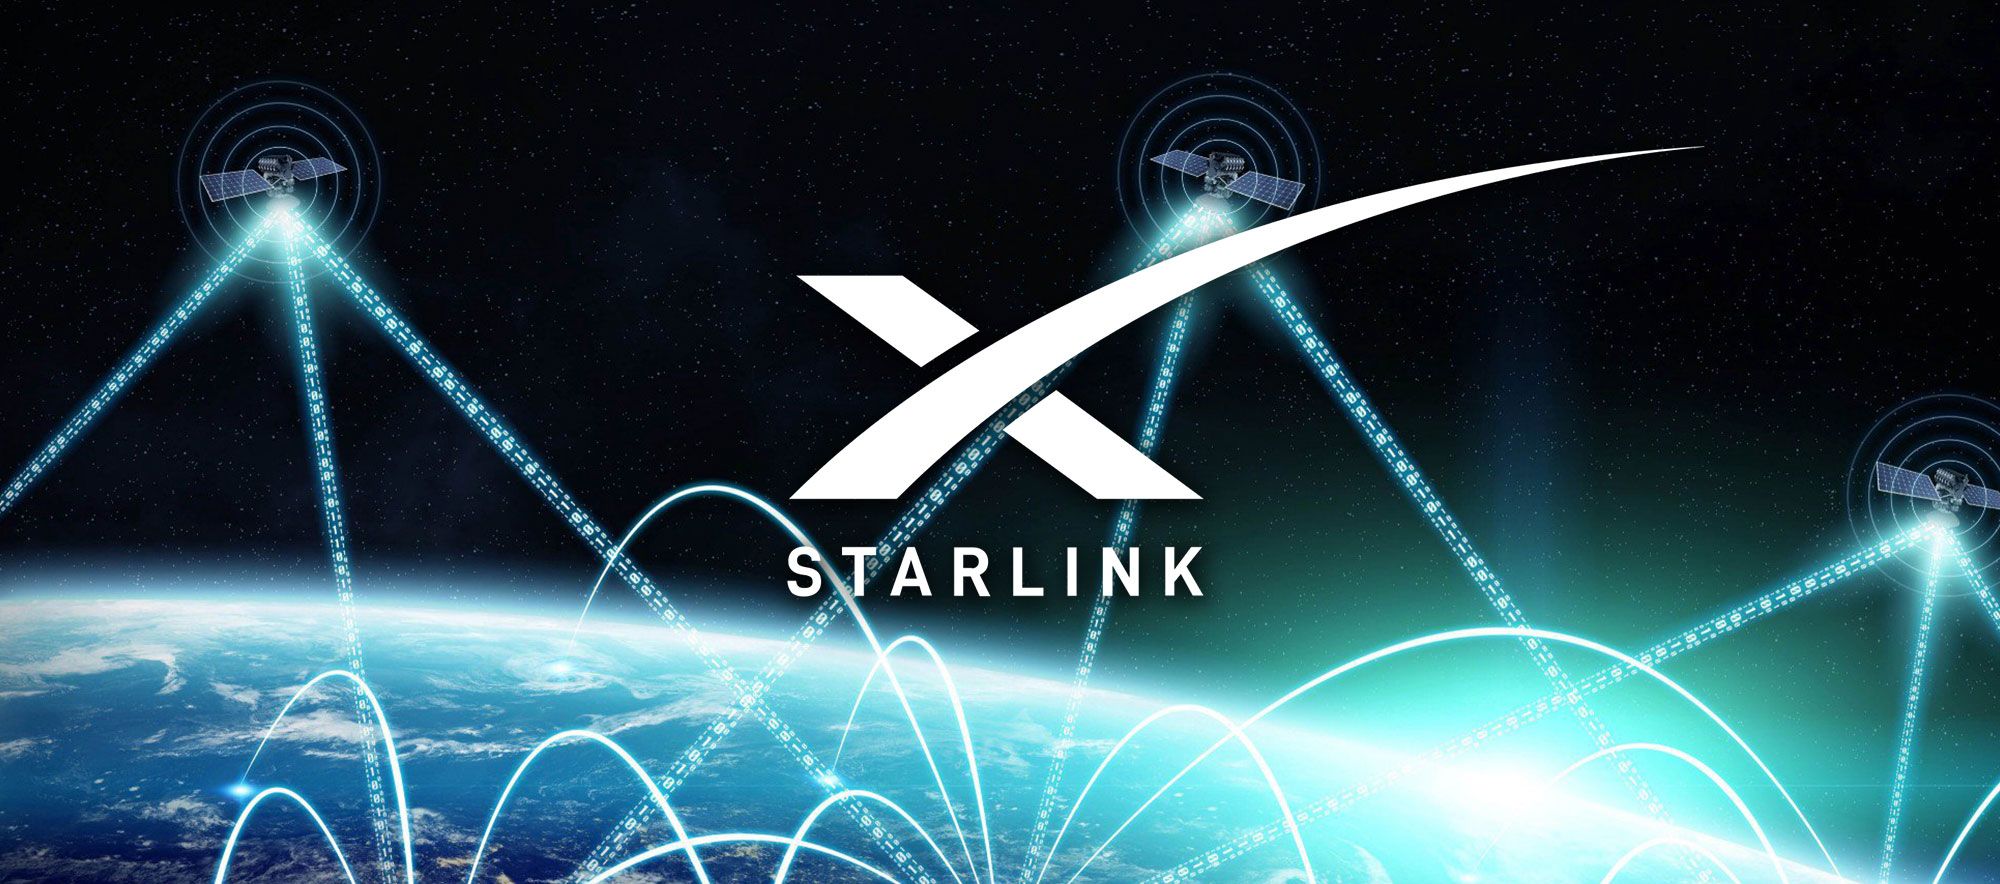 <i>Starlink </i>планирует запуск телефонной связи